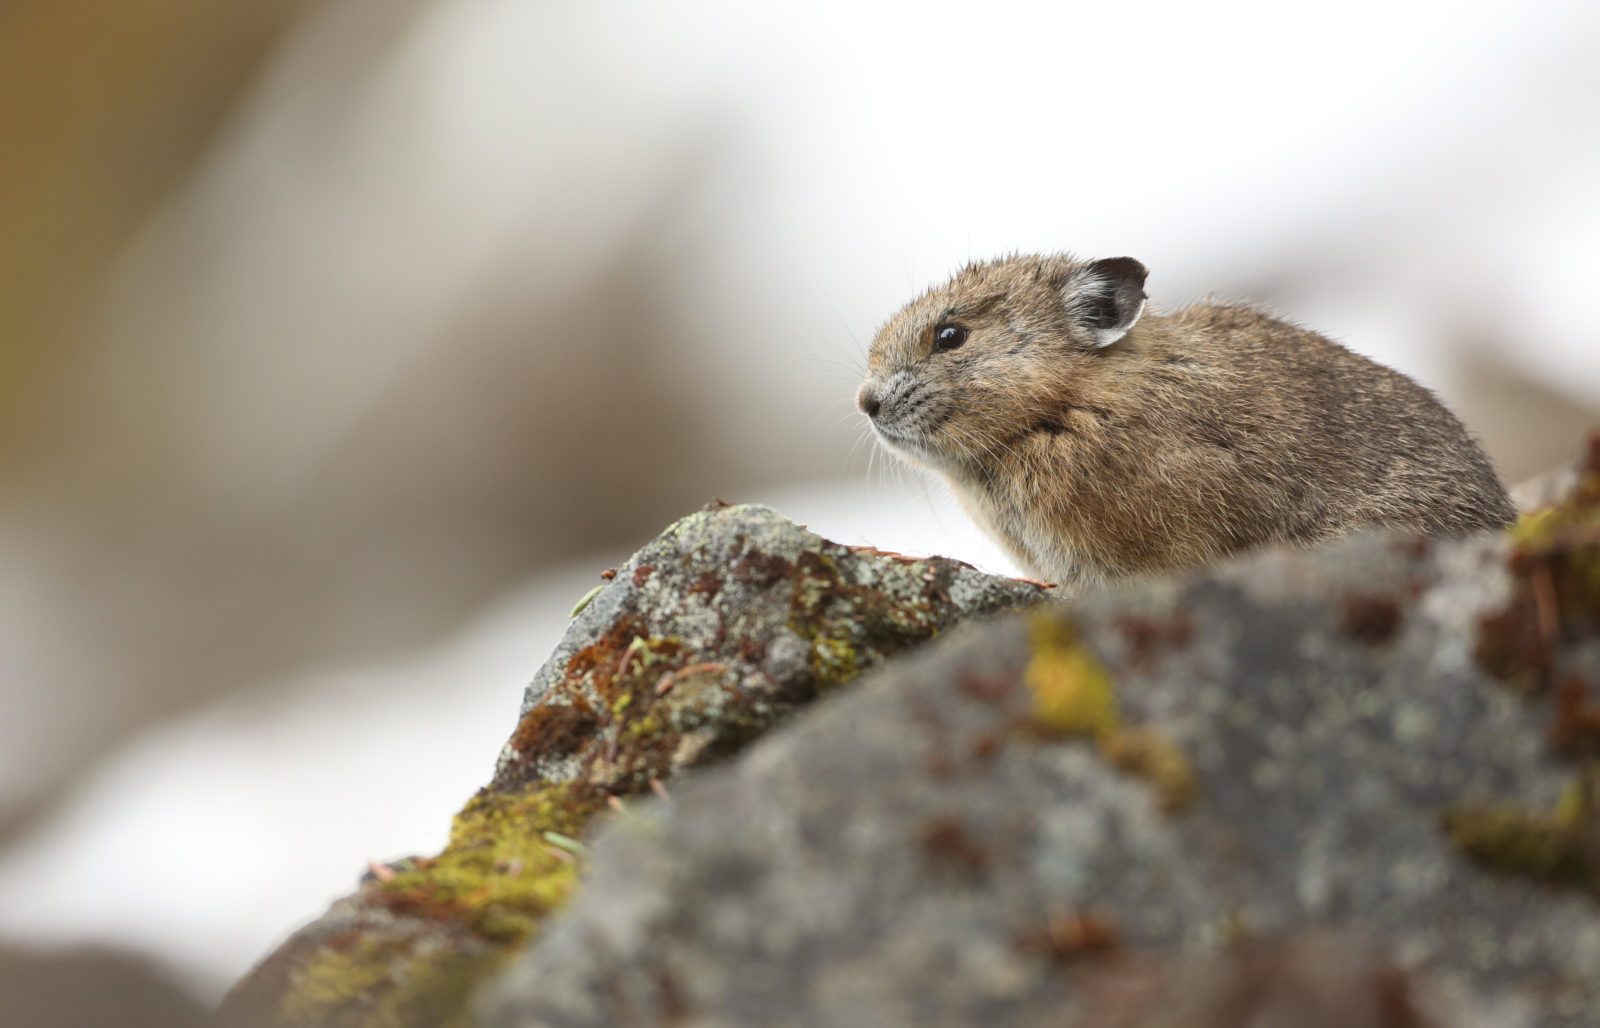 A small, furry, rodent-like mammal sits on rocks.